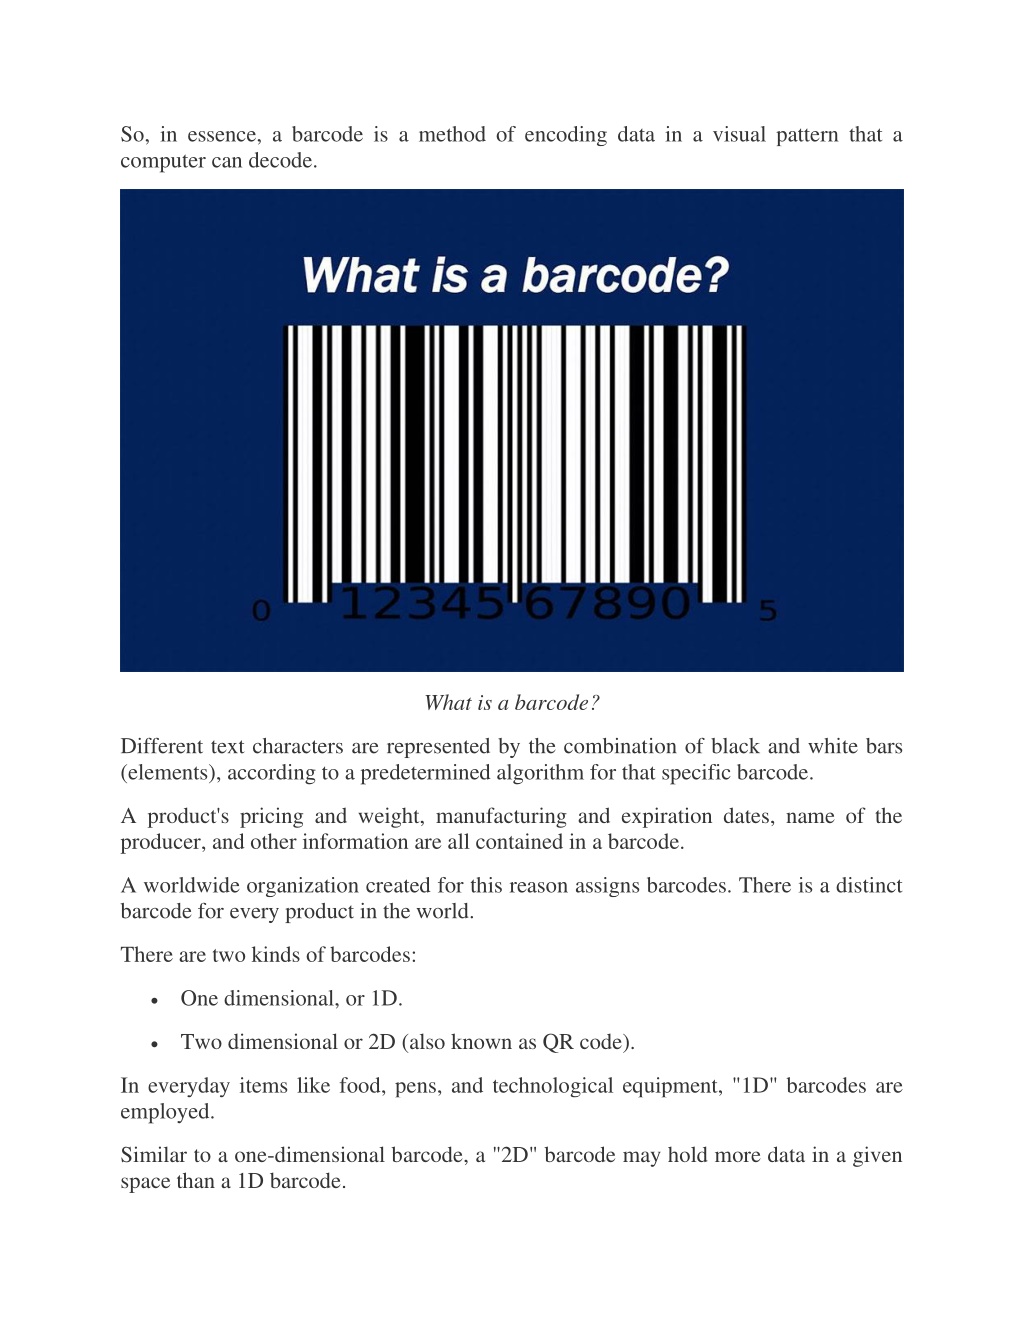 powerpoint presentation on barcodes